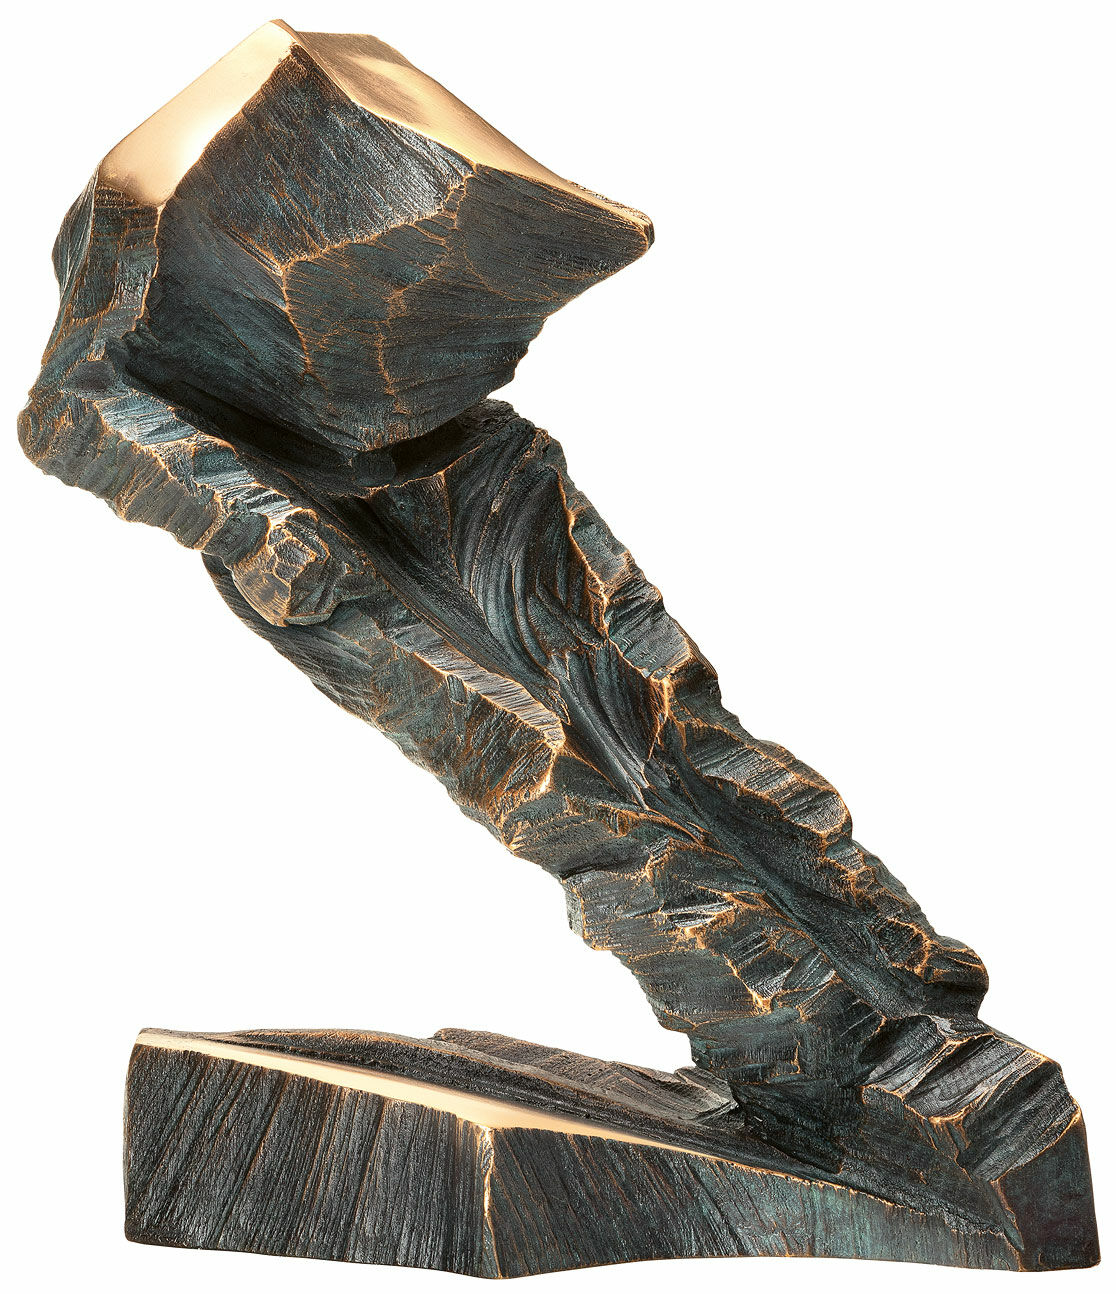 Sculpture "Super-G", bronze by Michael Vogler